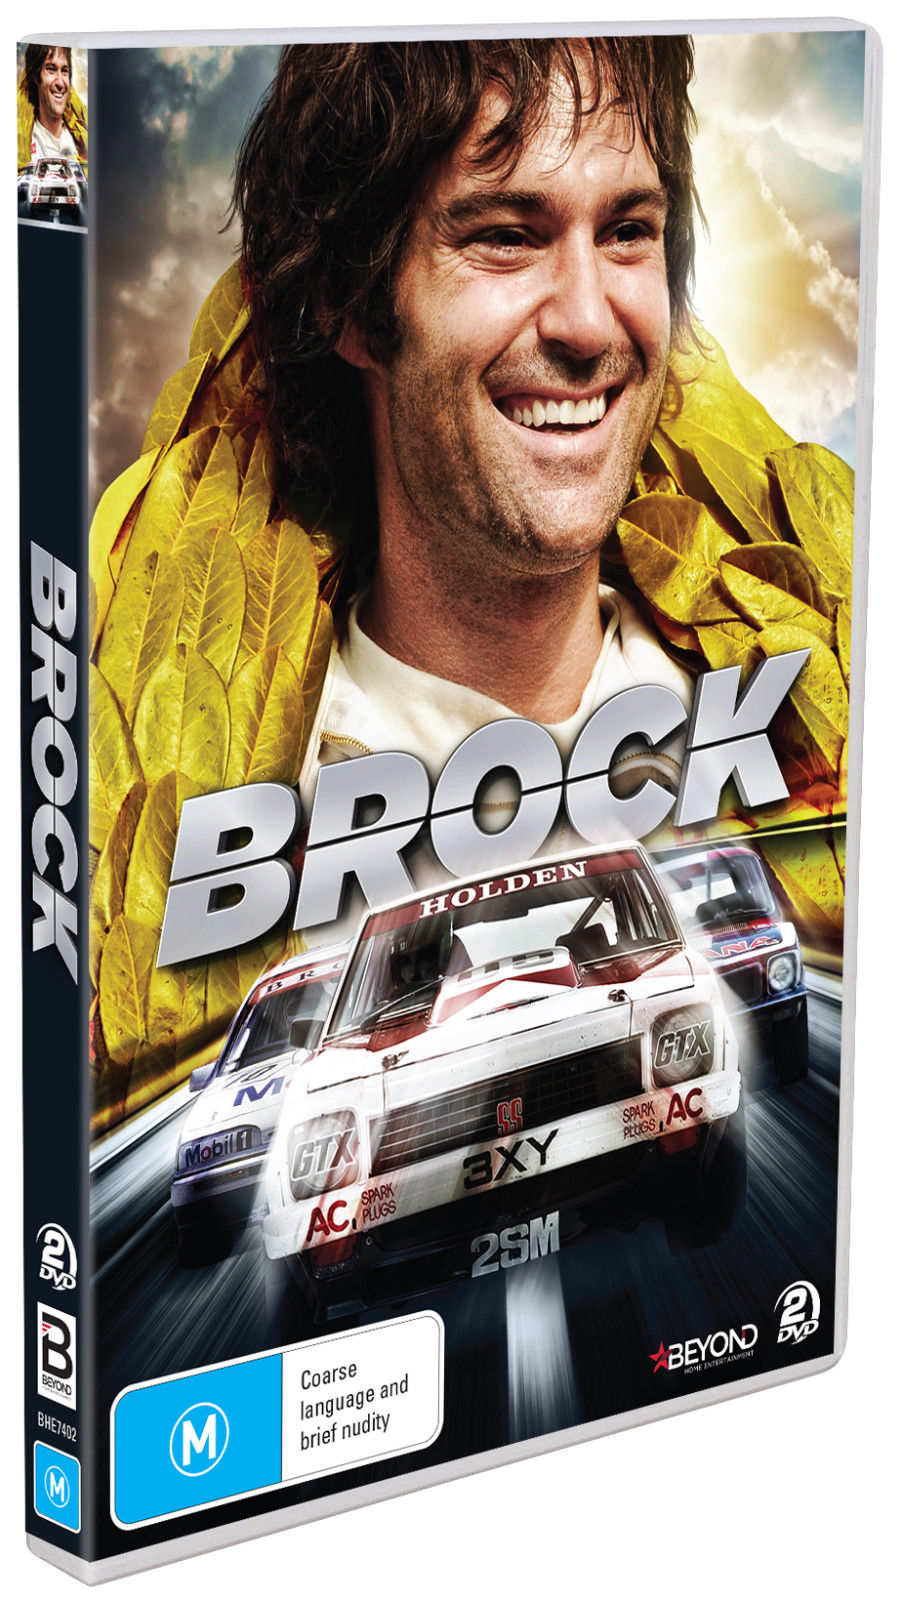 Peter Brock DVD